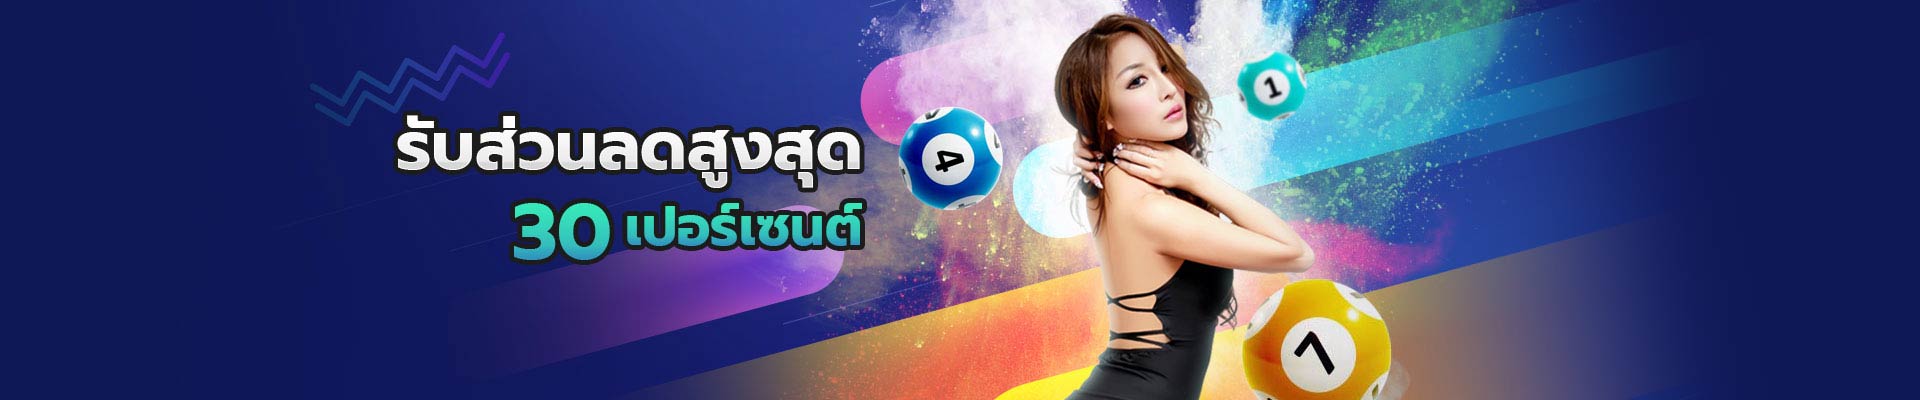 huay online thai lotto